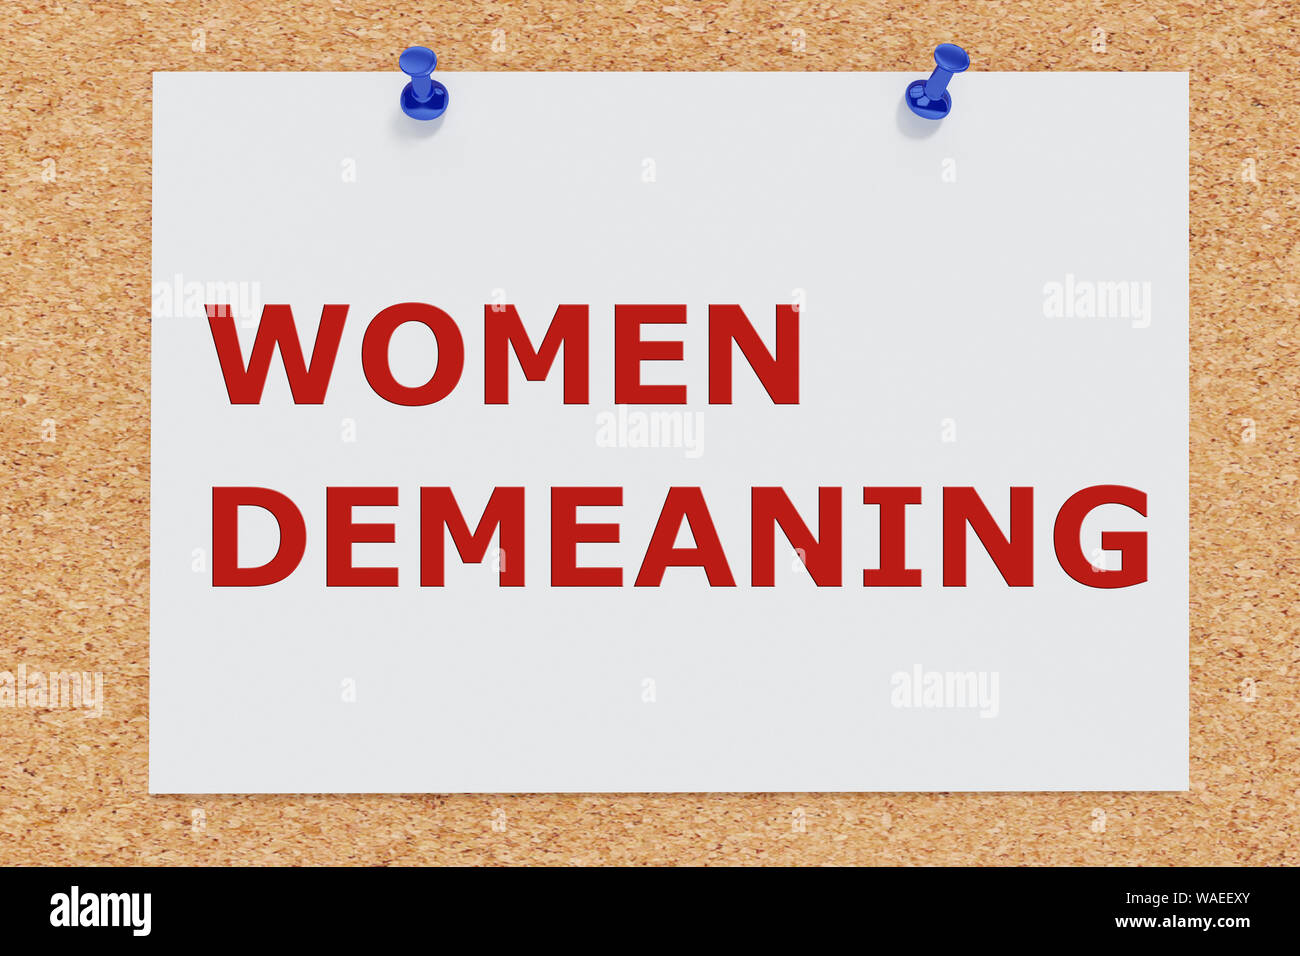 3D illustration of WOMEN DEMEANING on cork board Stock Photo